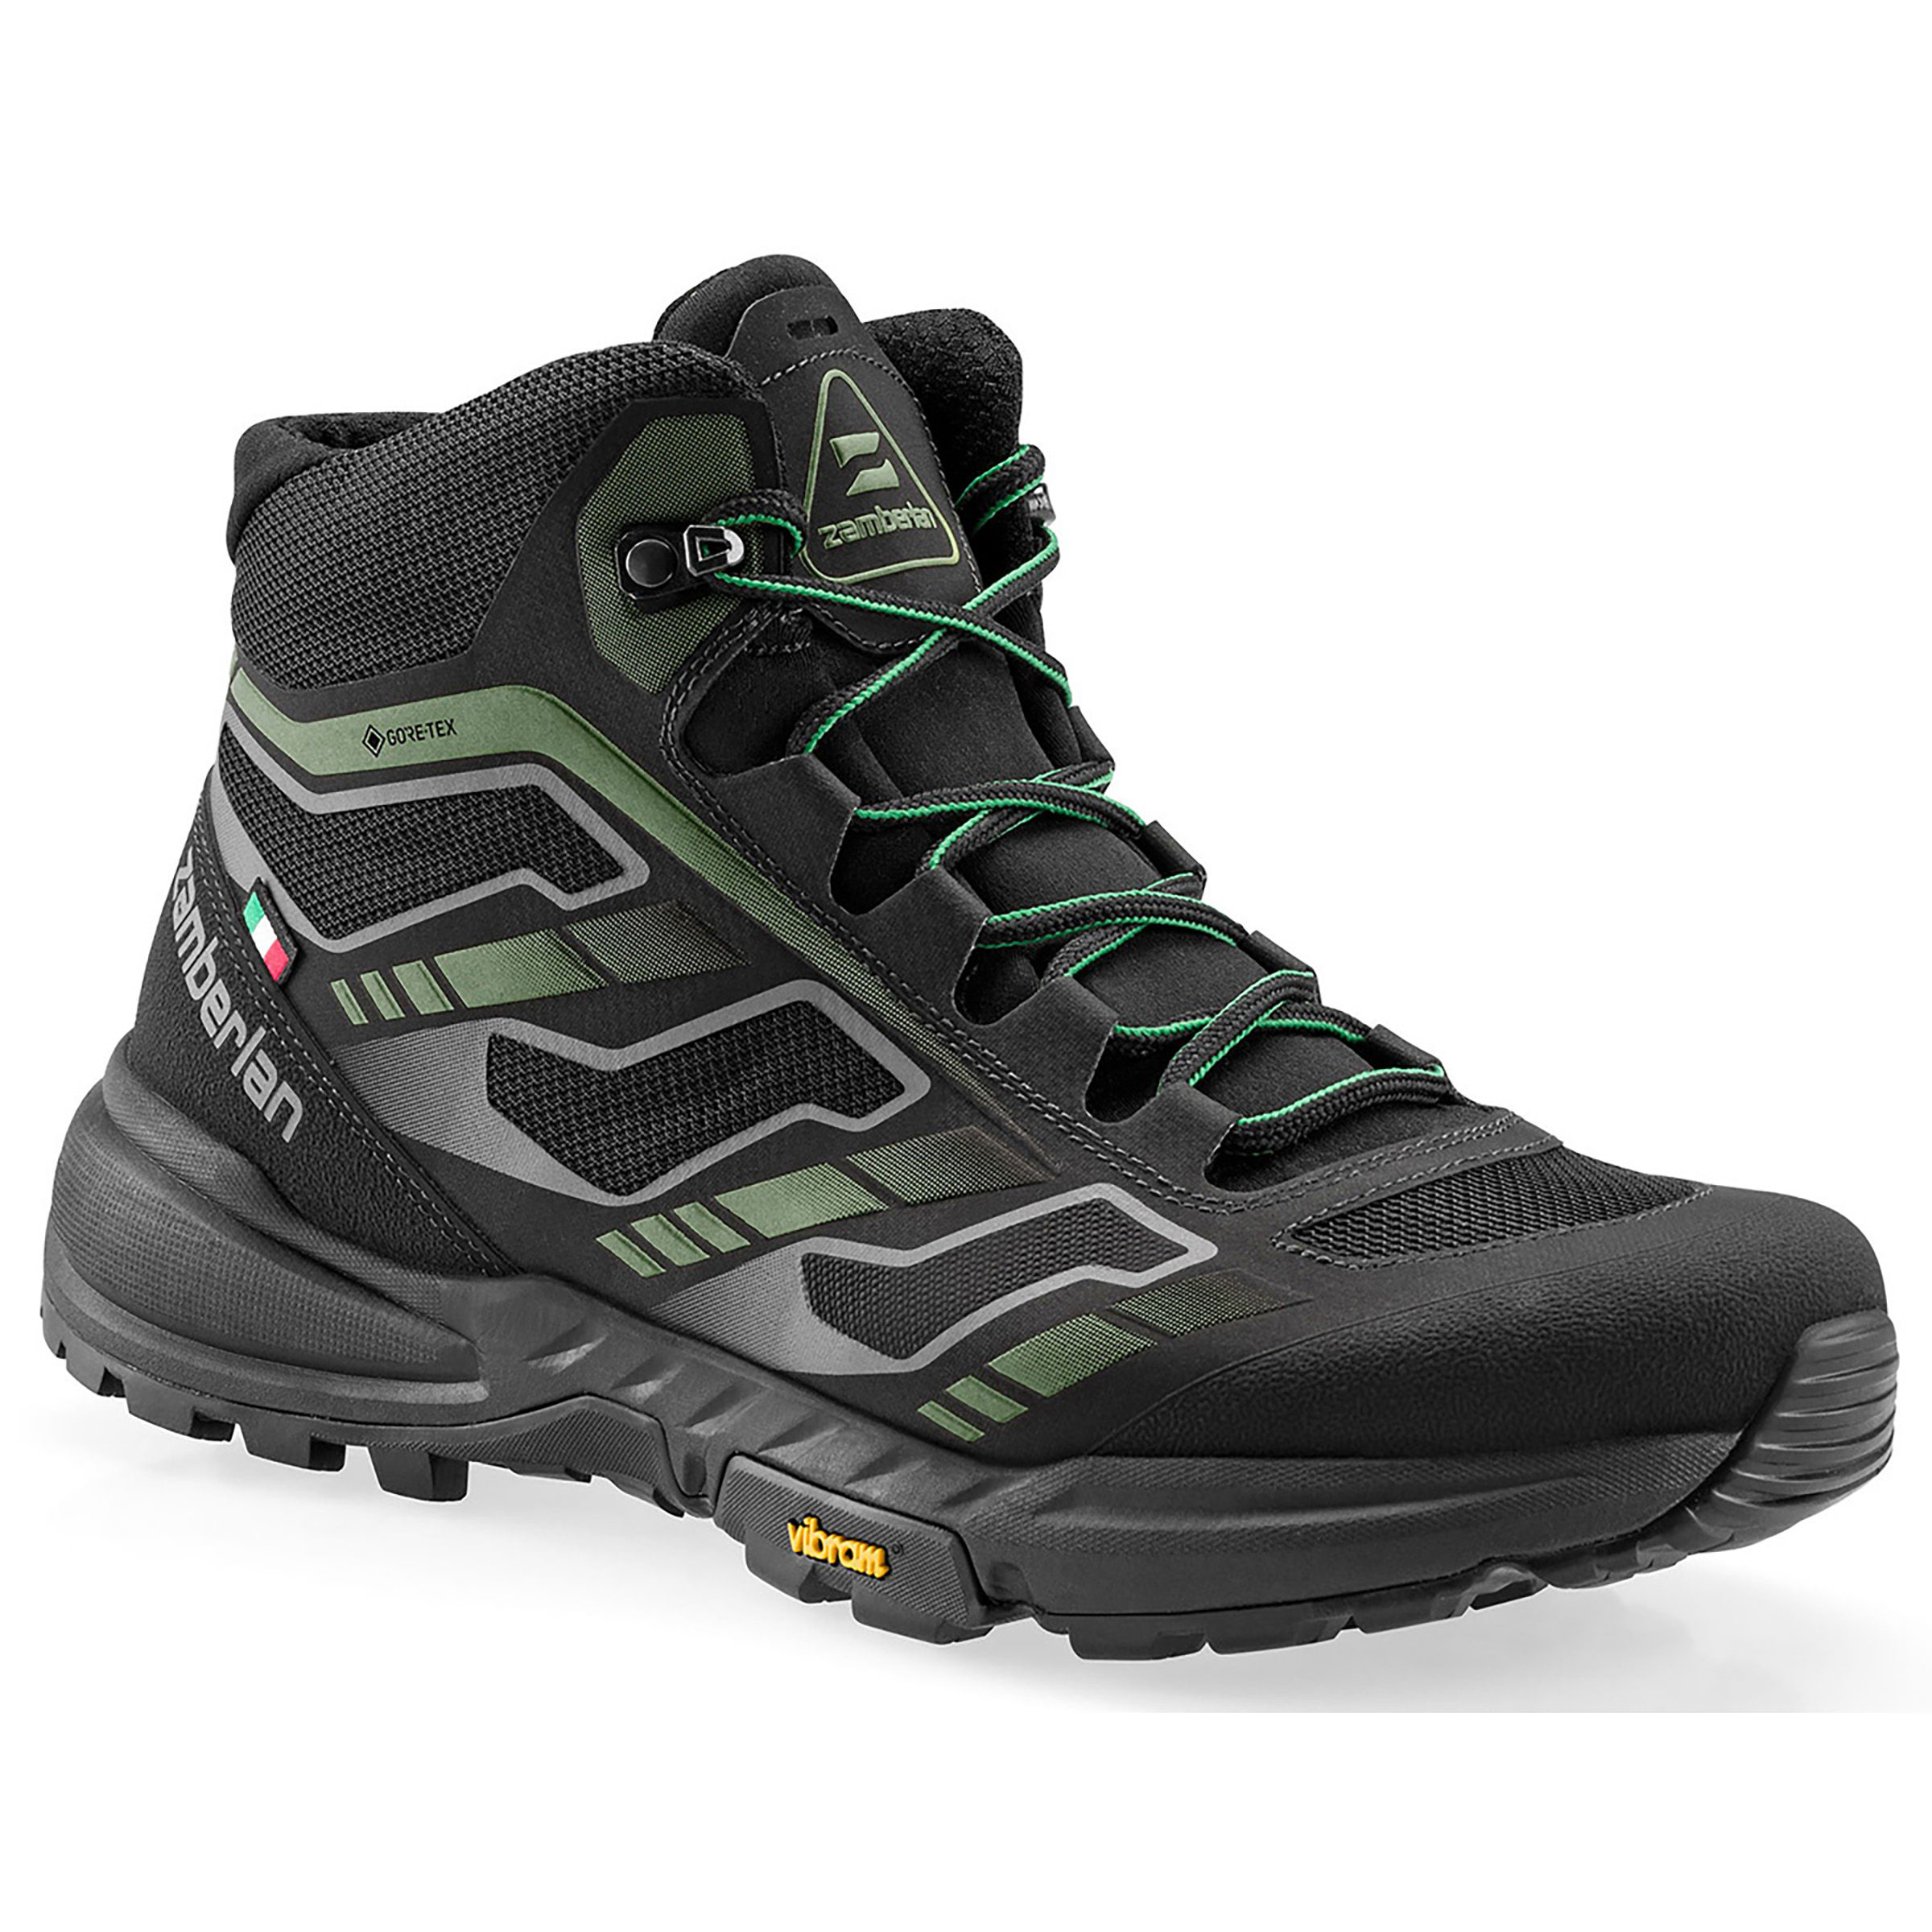 Zamberlan 219 Anabasis GTX Waterproof Mid Hiking Boots for Men - Dark Green - 11M